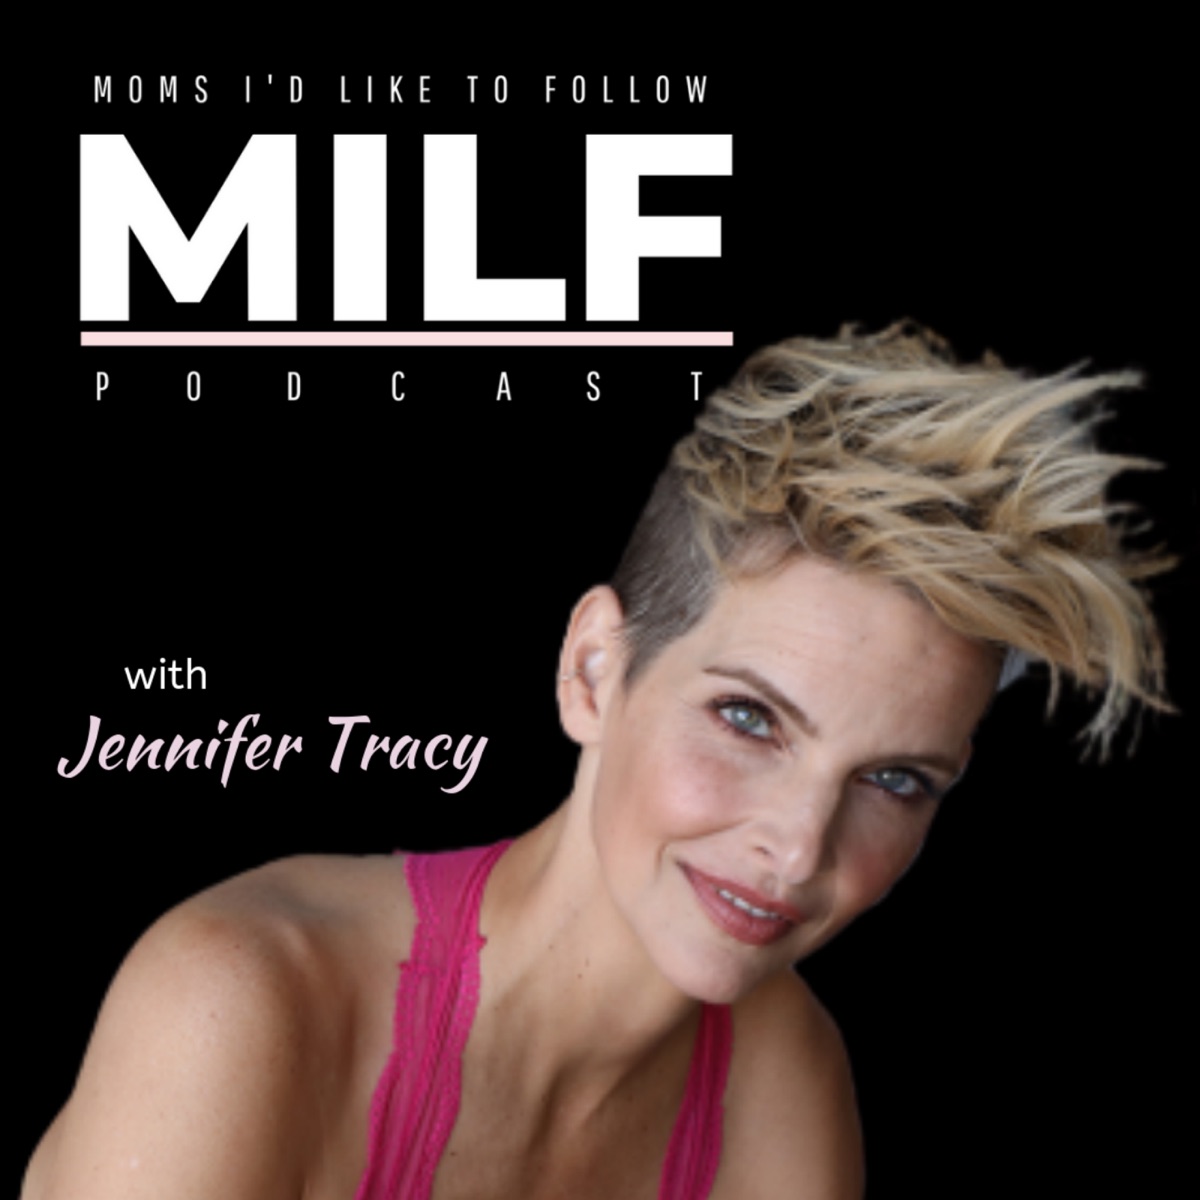 MILF Podcast - Moms Id Like to Follow